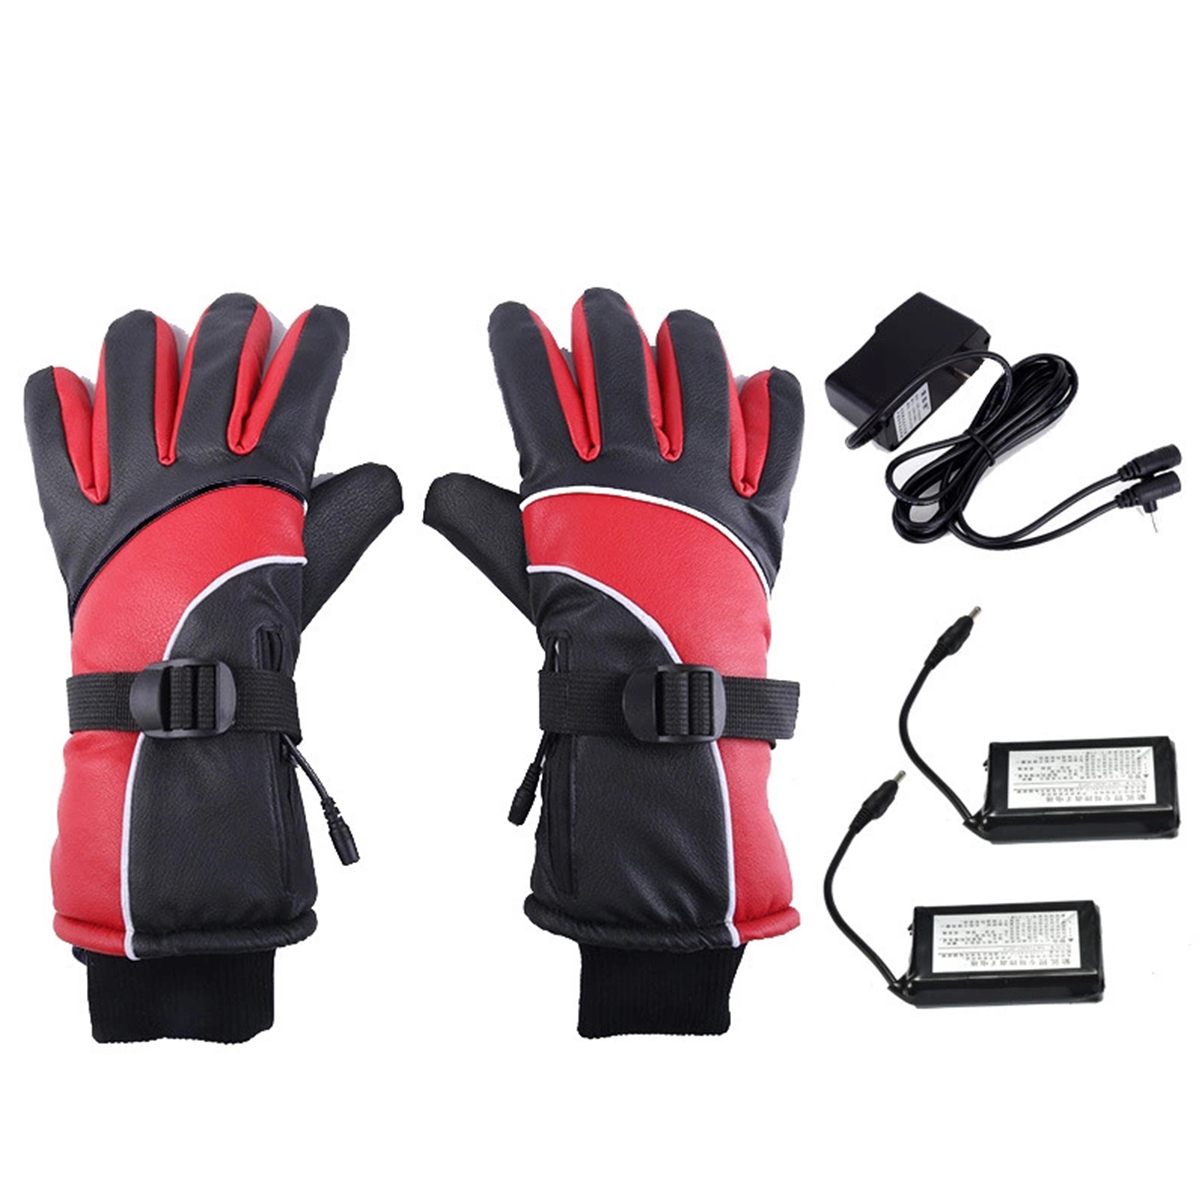 40006000mAh-Electric-Battery-Heating-Gloves-Men-Women-Winter-Heated-Warmer-Sport-Protector-1618098-10